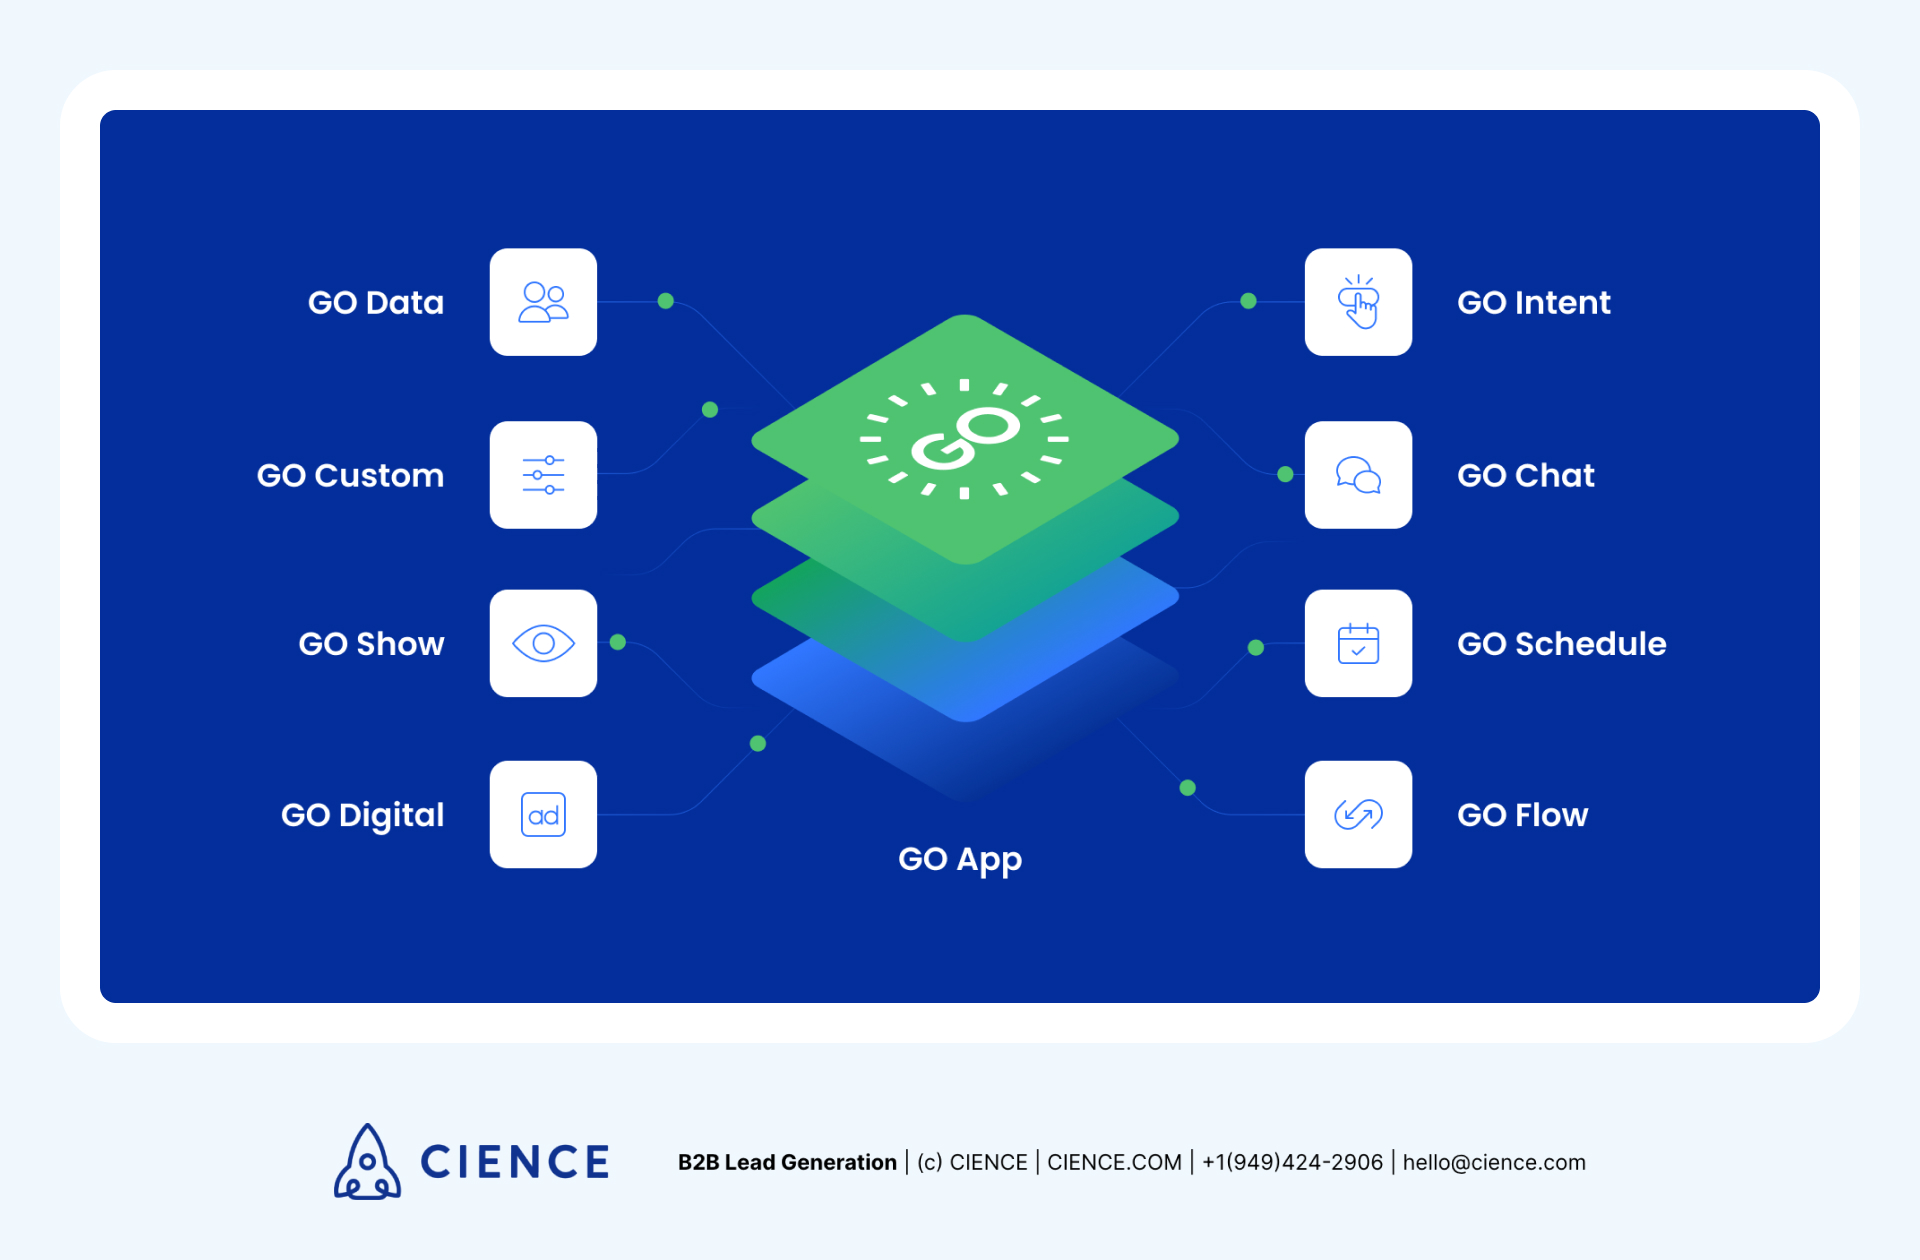 CIENCE GO App Products: GO Data, GO Custom, GO Intent, GO Show, GO Digital, GO Chat, GO Schedule, GO Flow